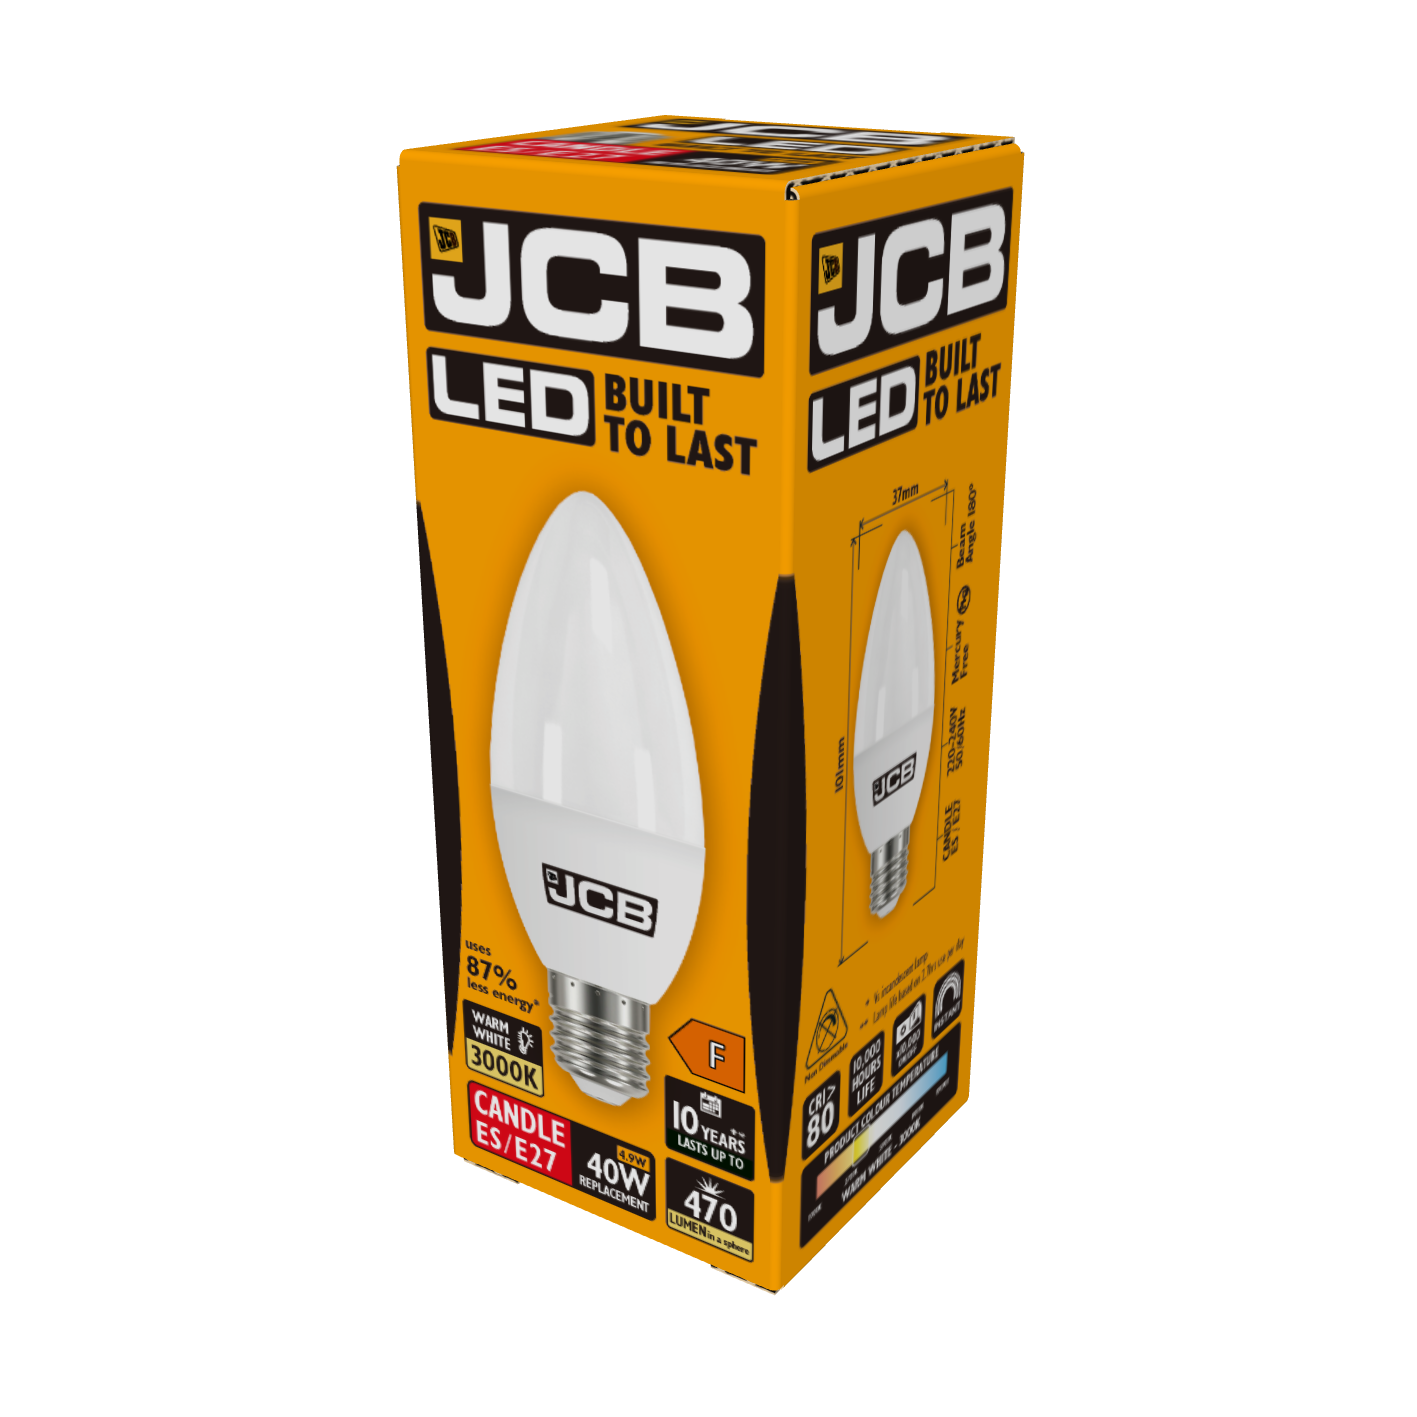 JCB LED Candle E27 (ES) 470lm 4.9W 3,000K (Warm White), Box of 1